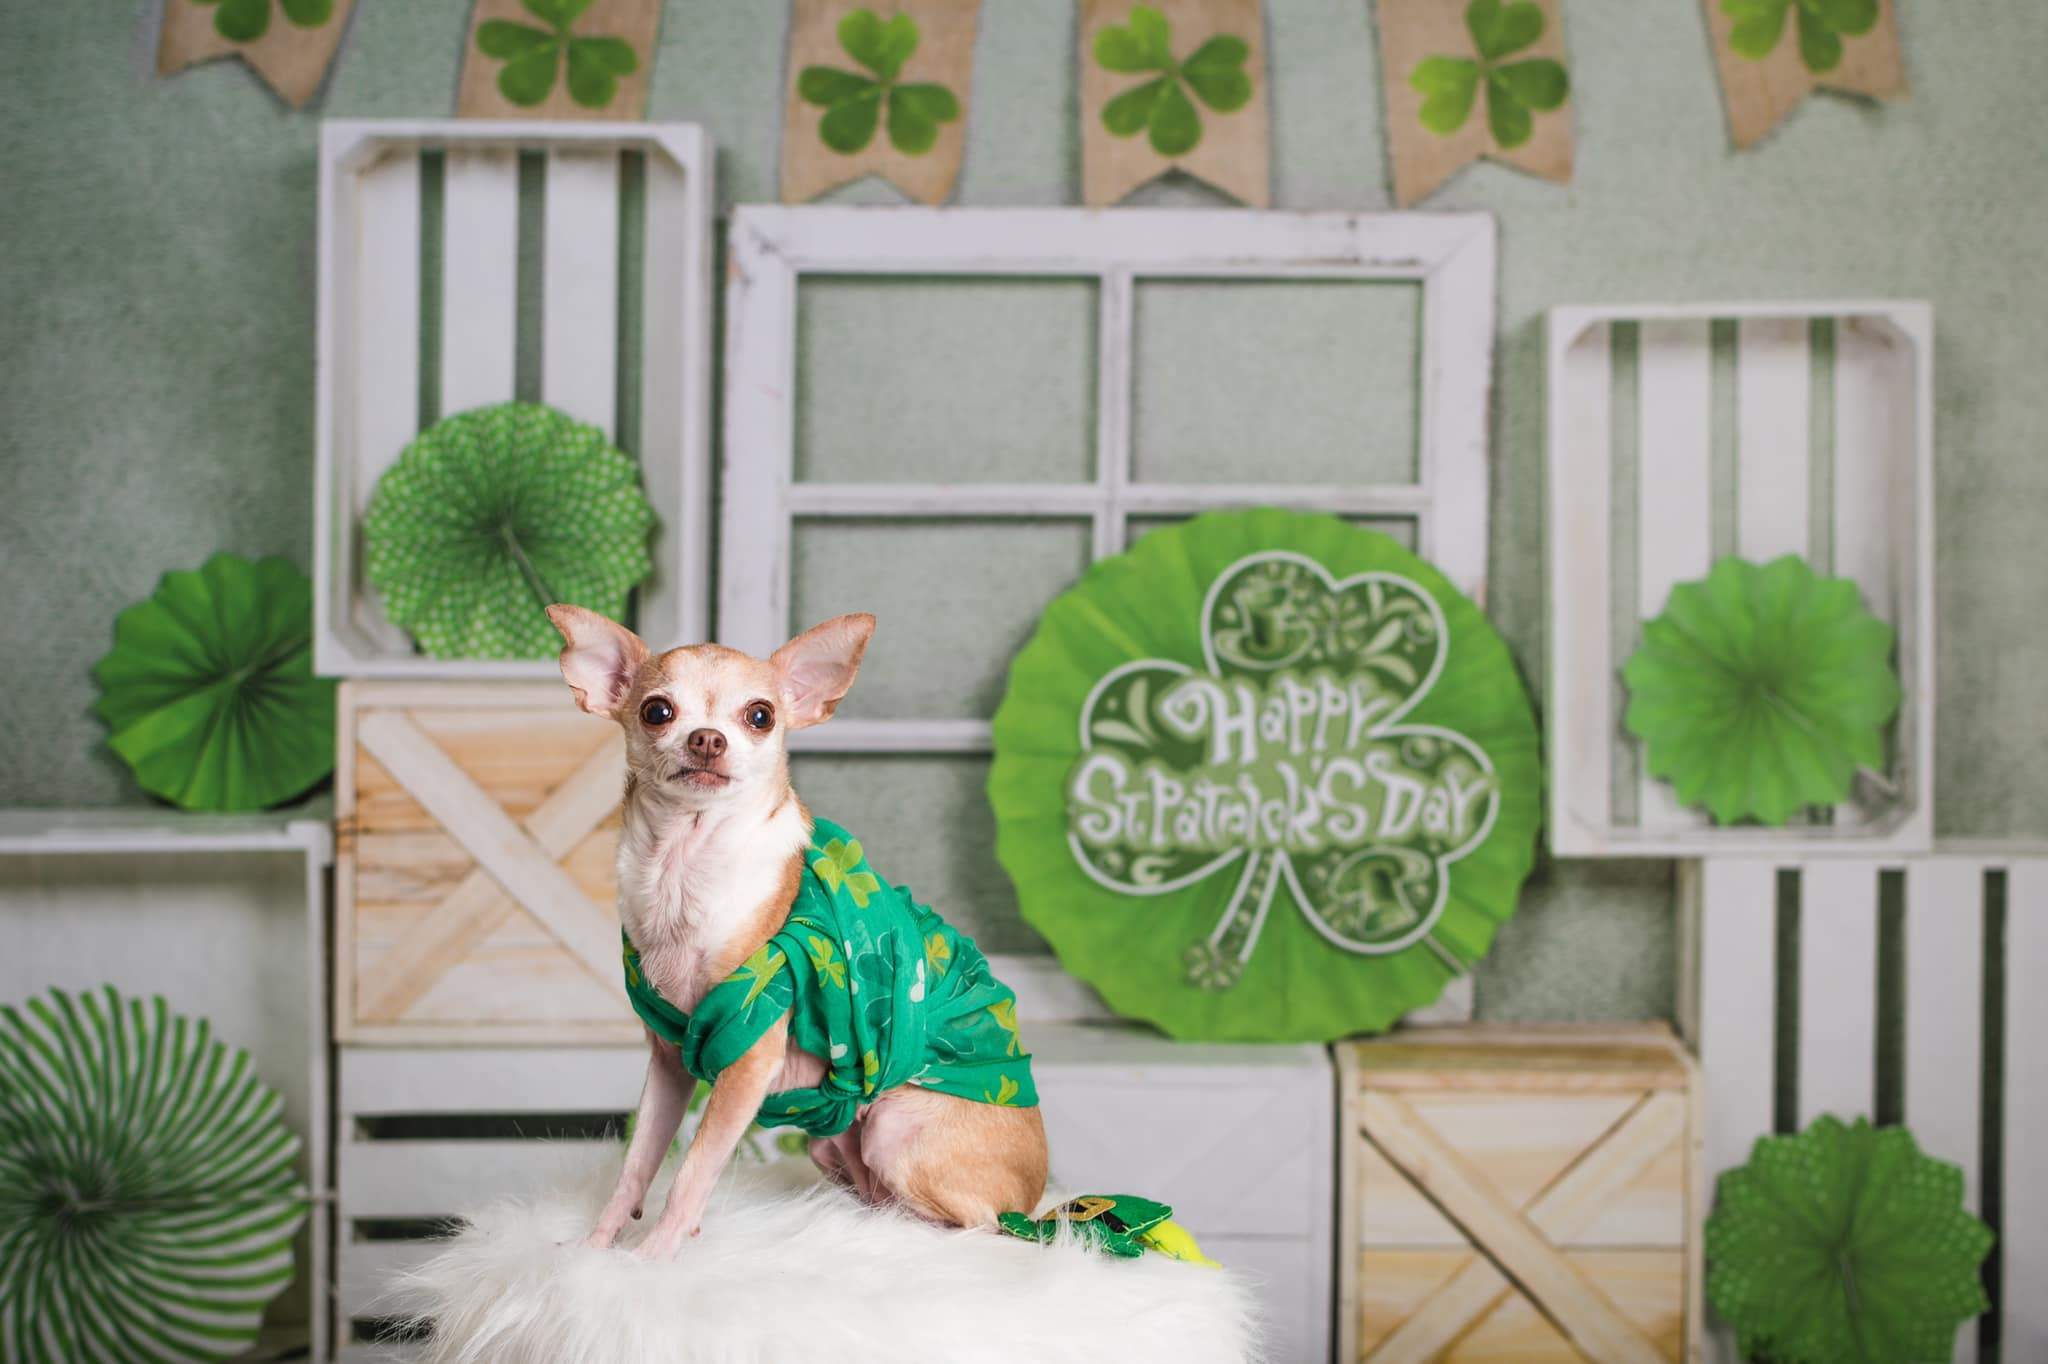 Kate St. Patrick's Day Green Shamrock Backdrop Designed by Emetselch